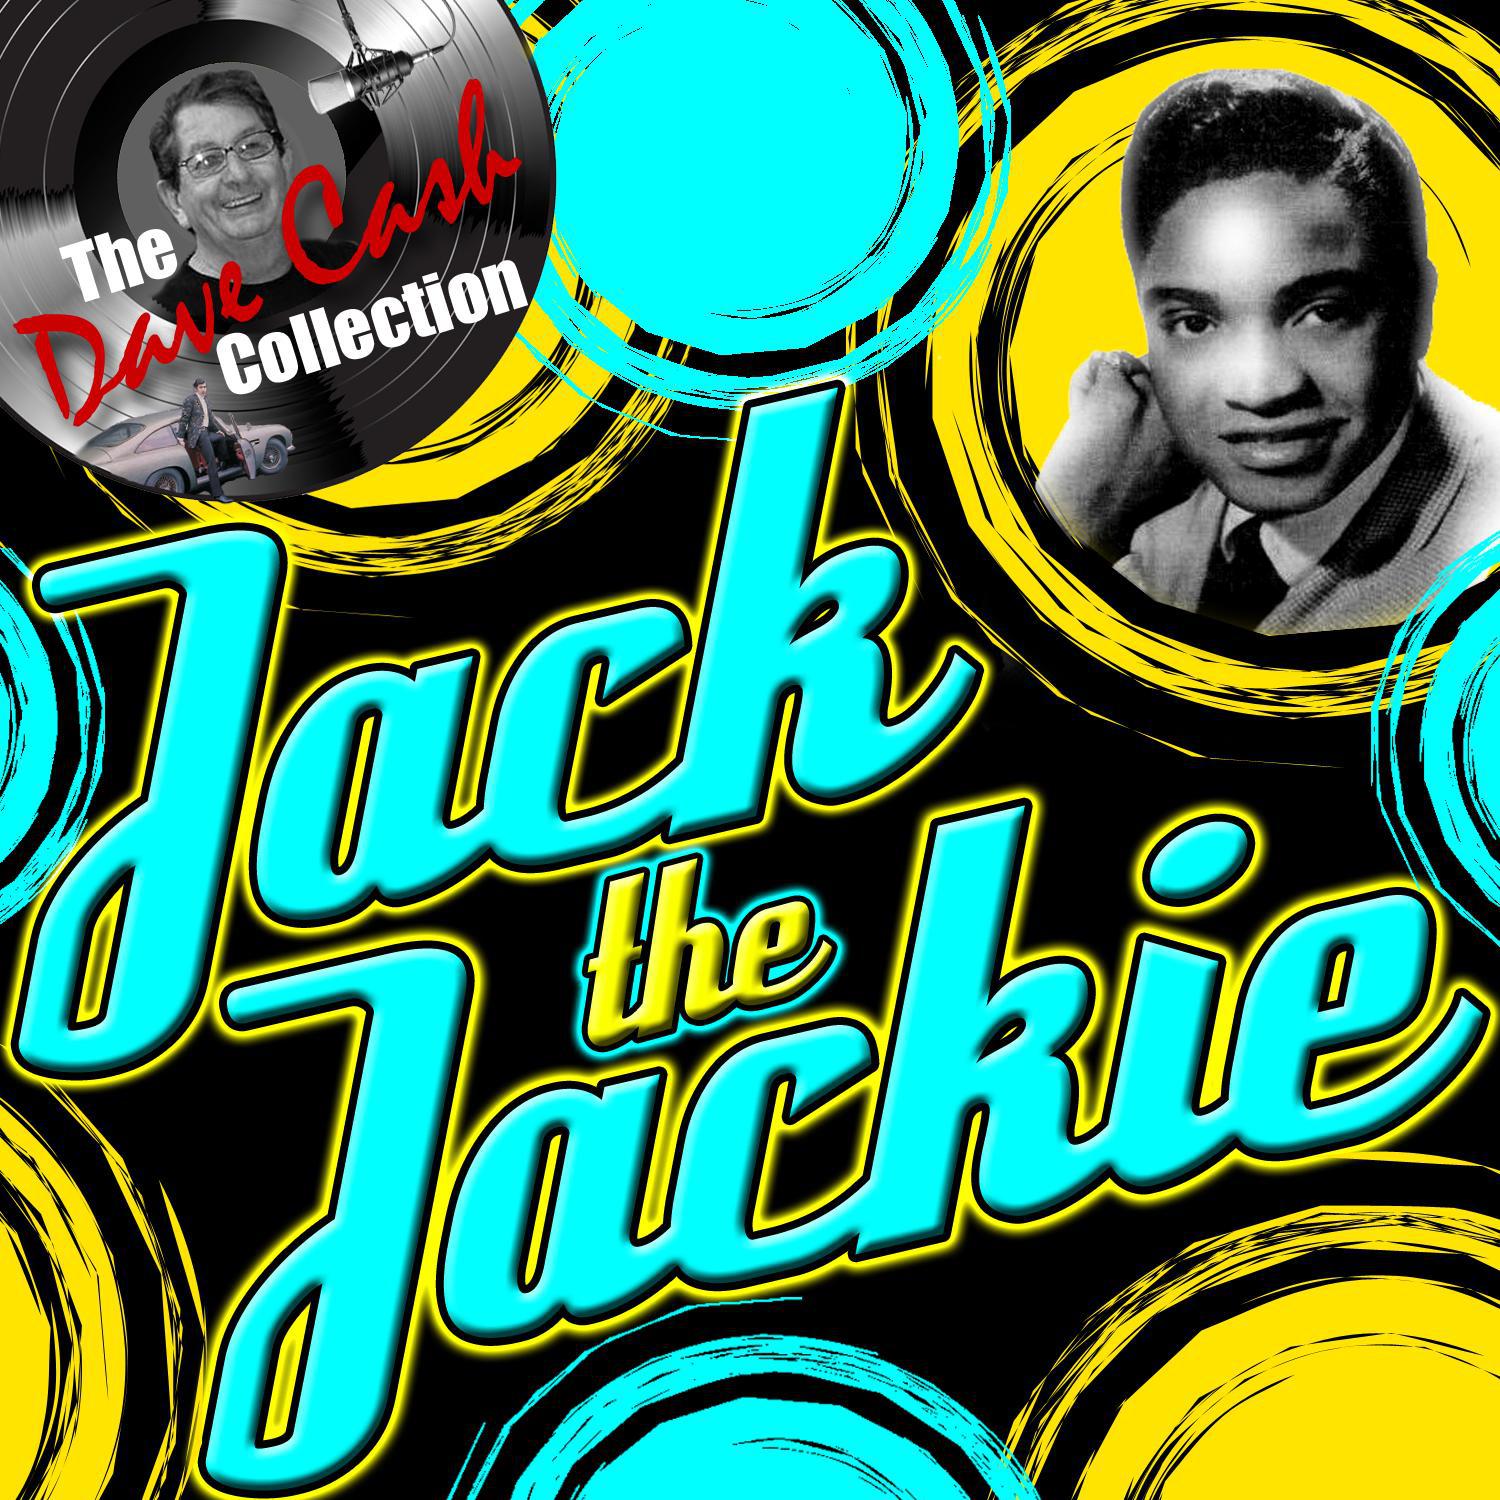 Jack the Jackie